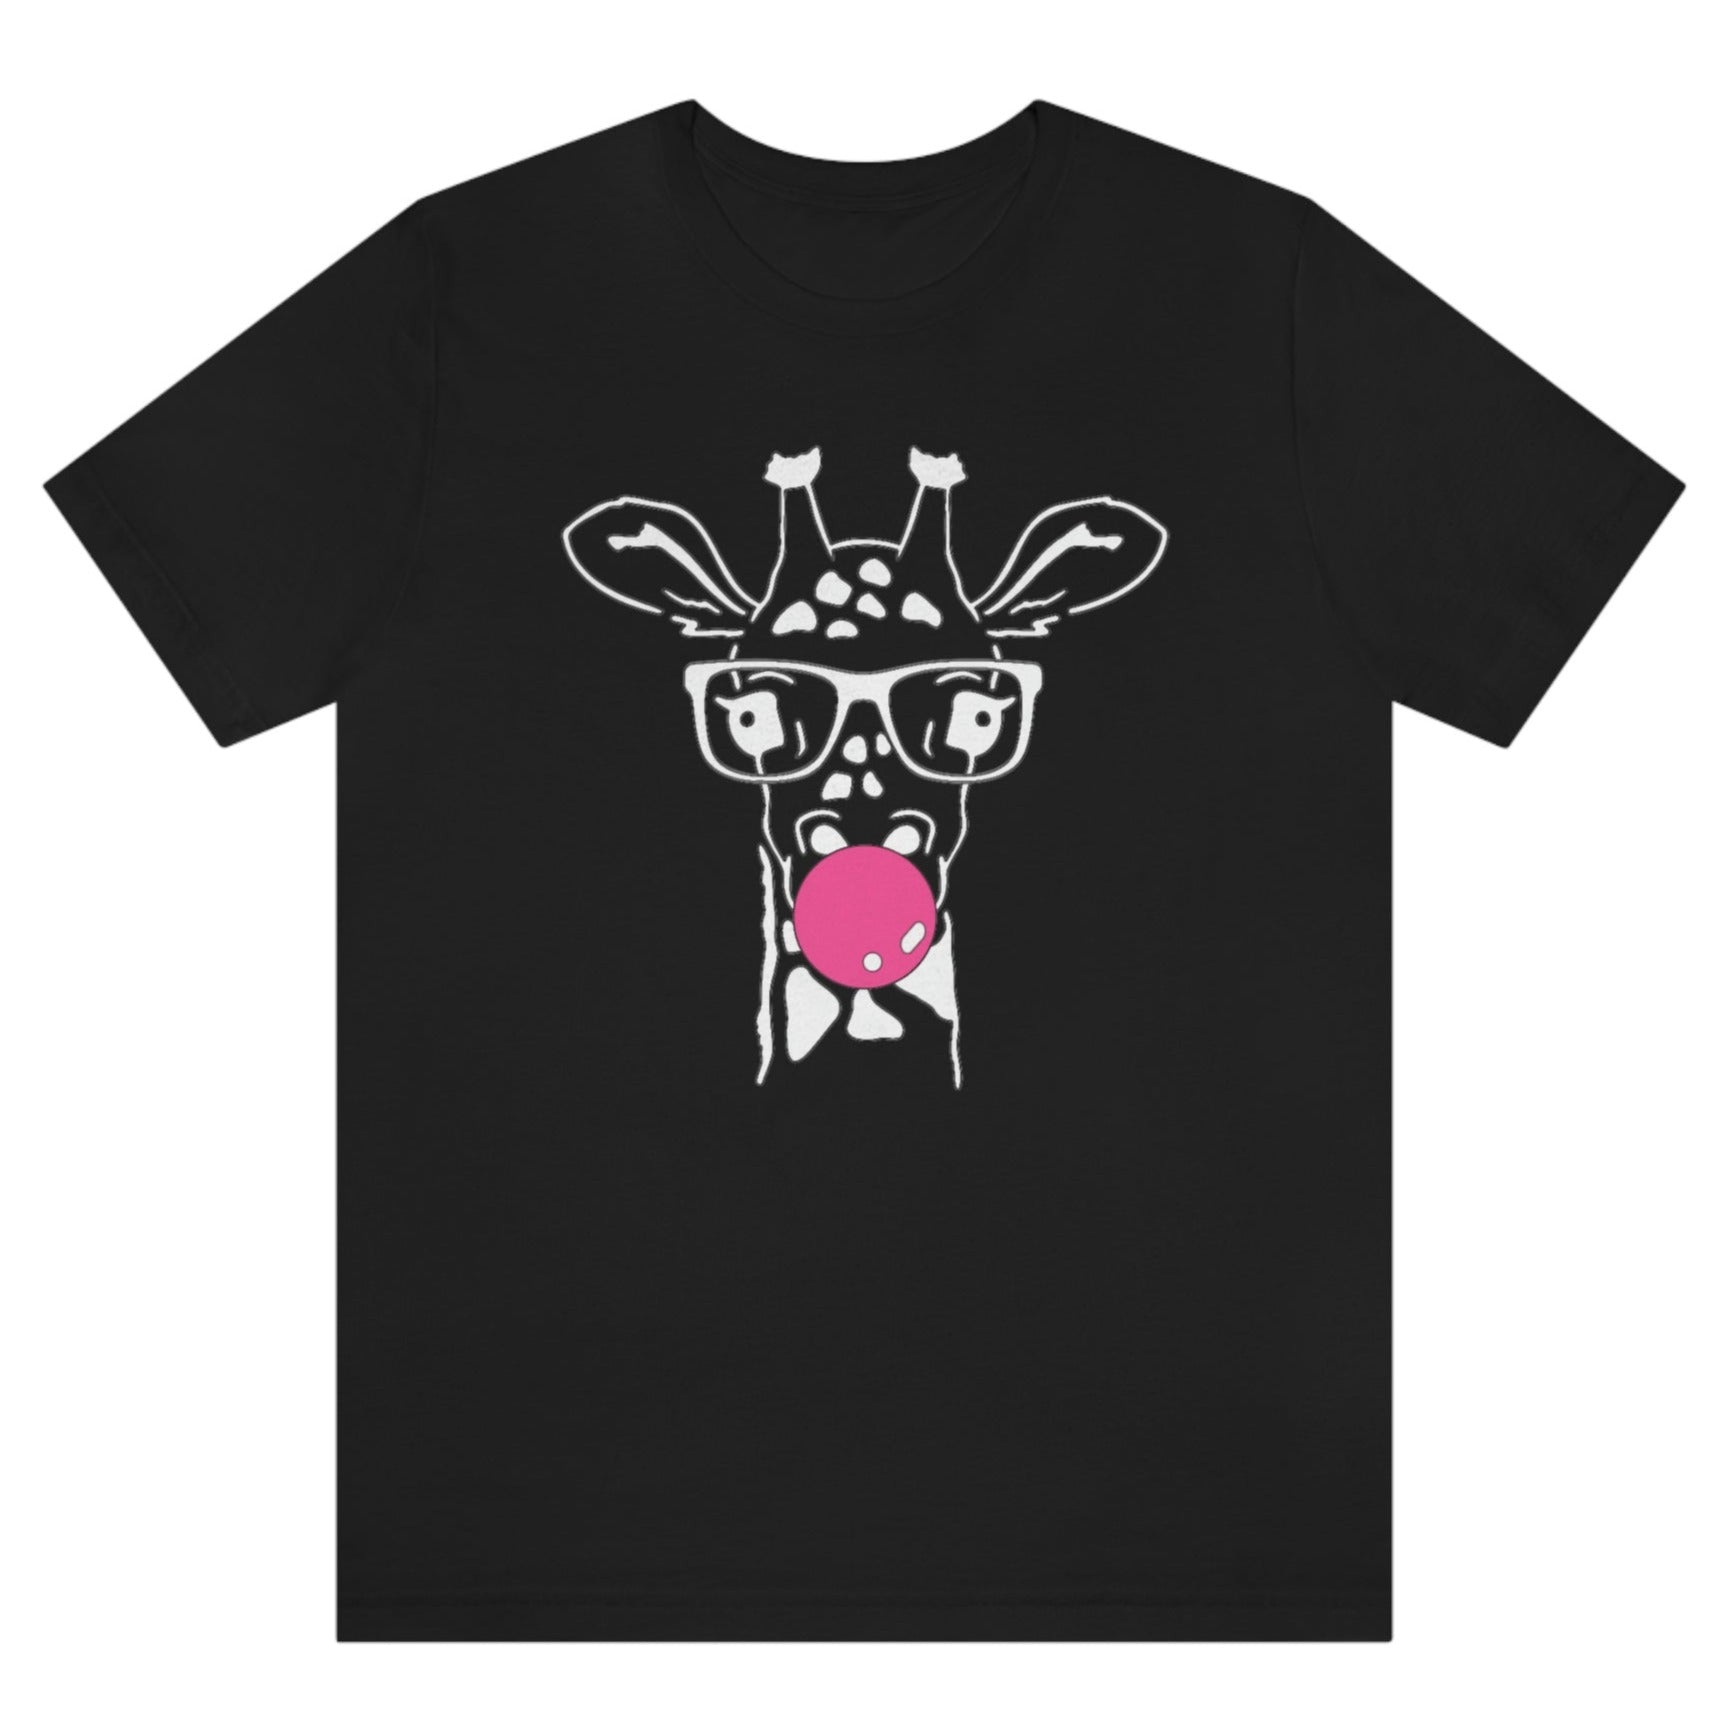 bubblegum-giraffe-black-t-shirt-womens-style